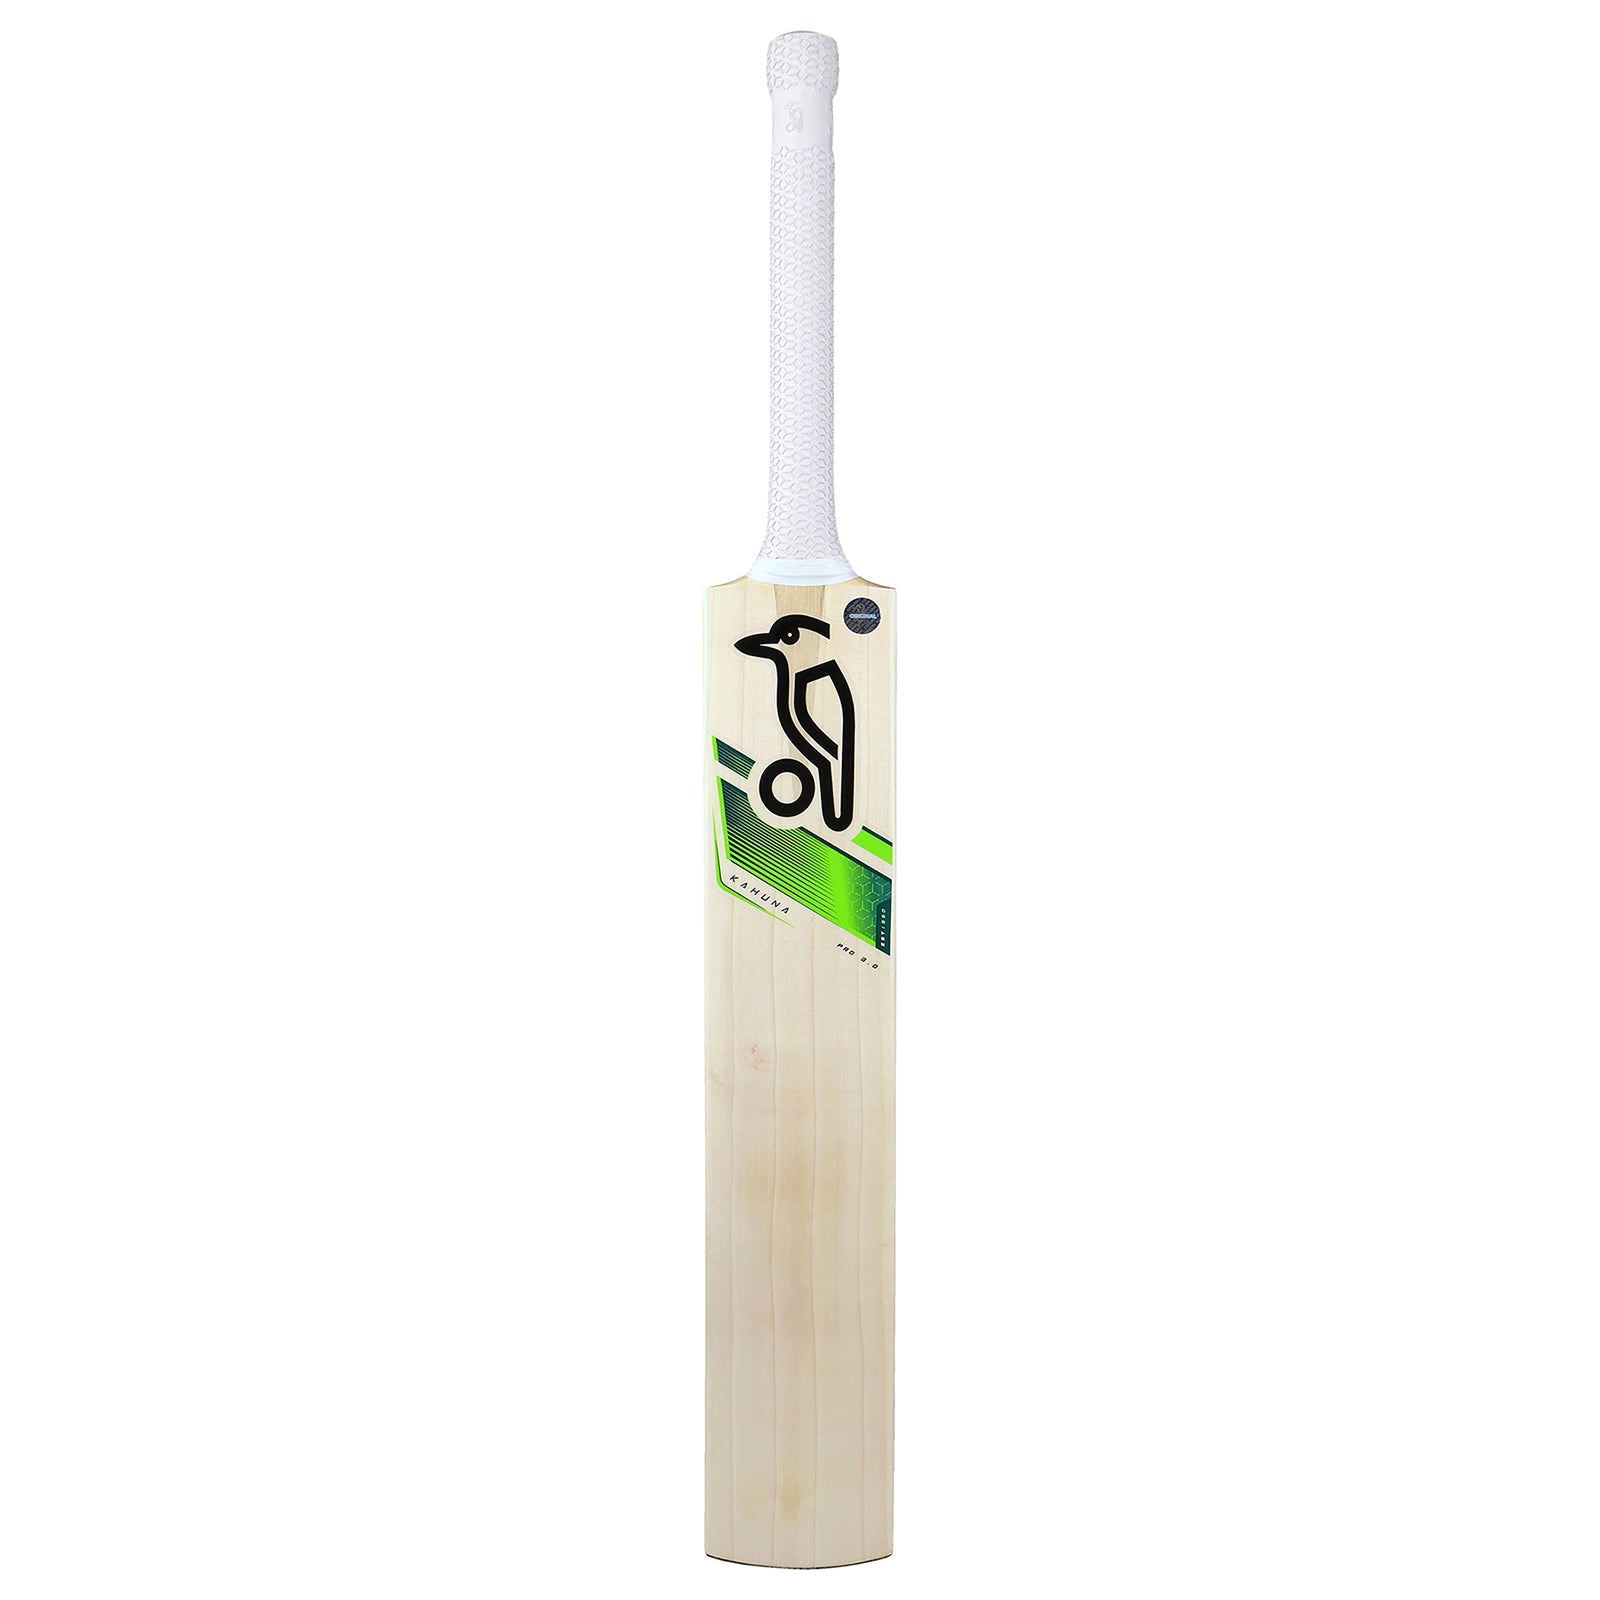 Kookaburra Kahuna Pro 3.0 Cricket Bat - Size 5